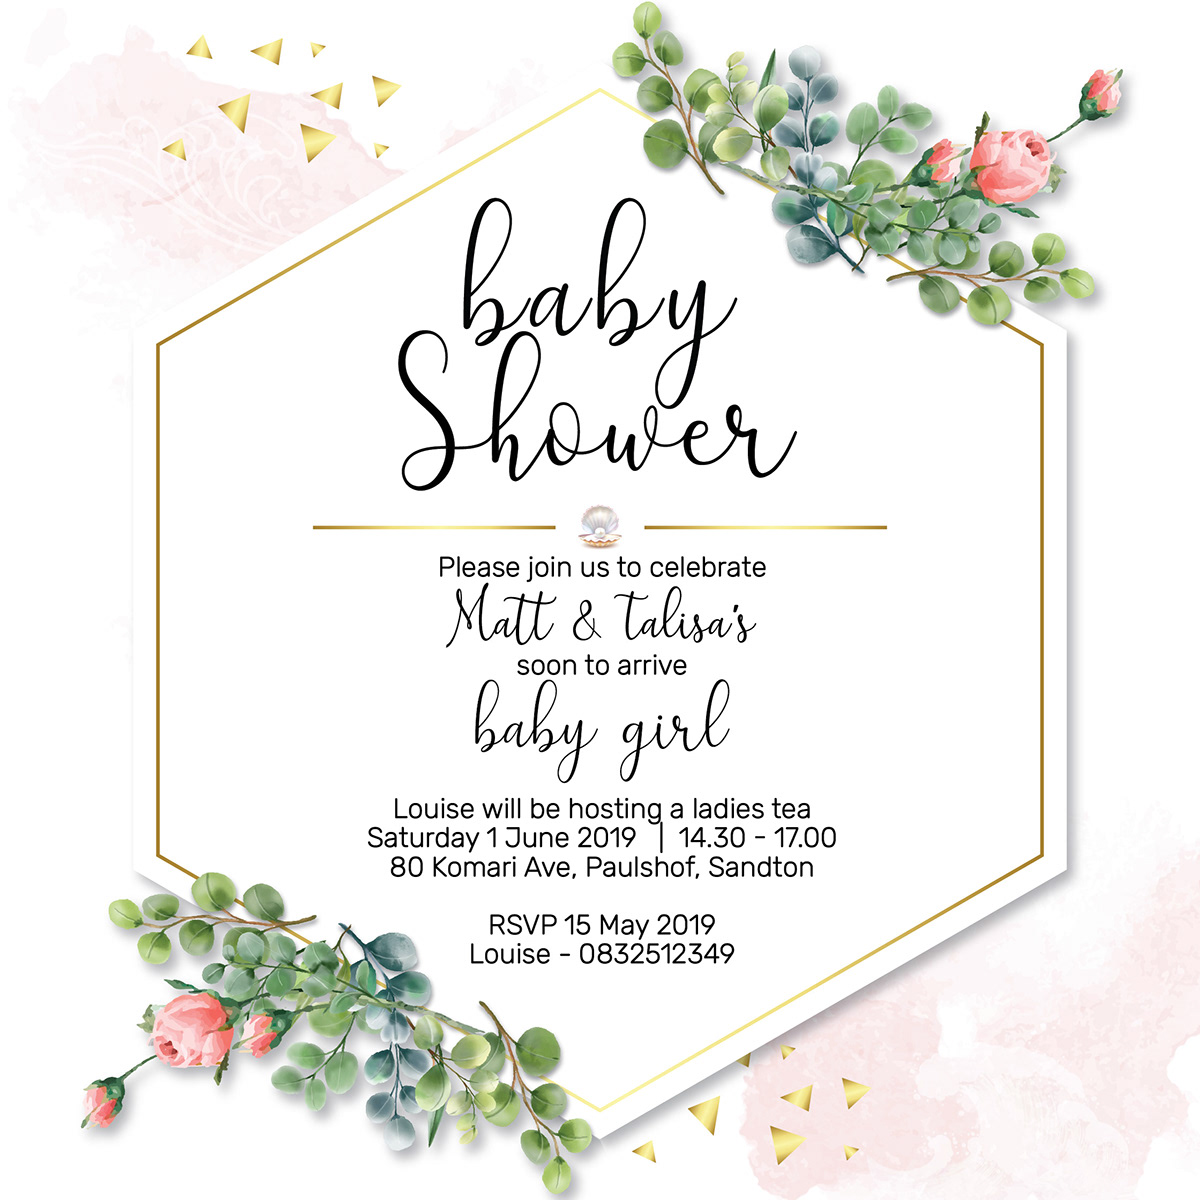 Baby Shower invite design